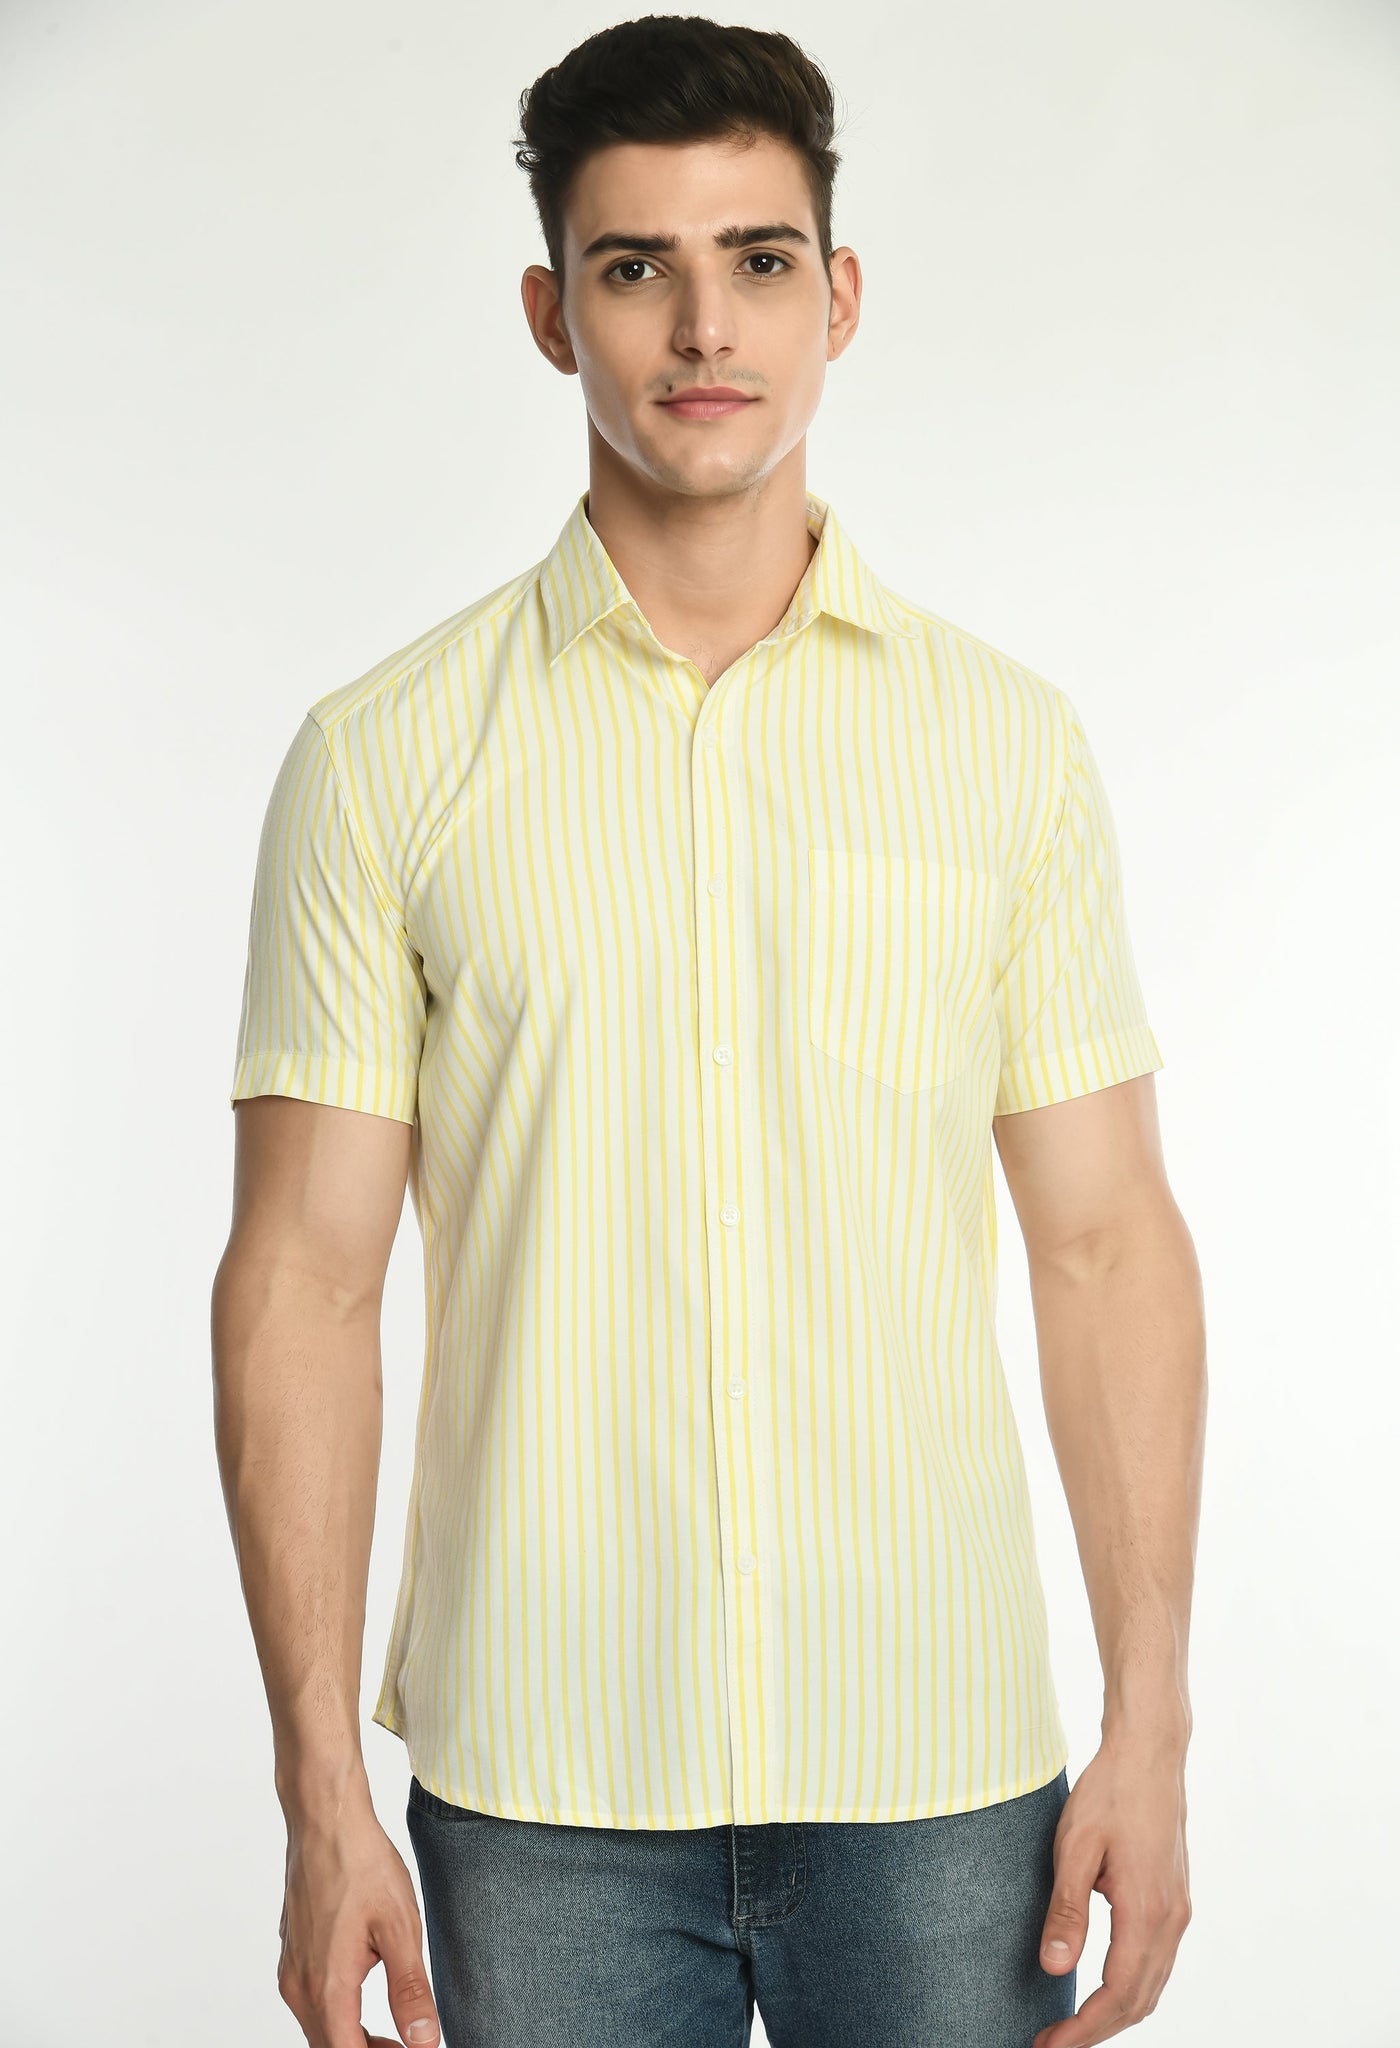 Men's Half Sleeves Striped Shirt